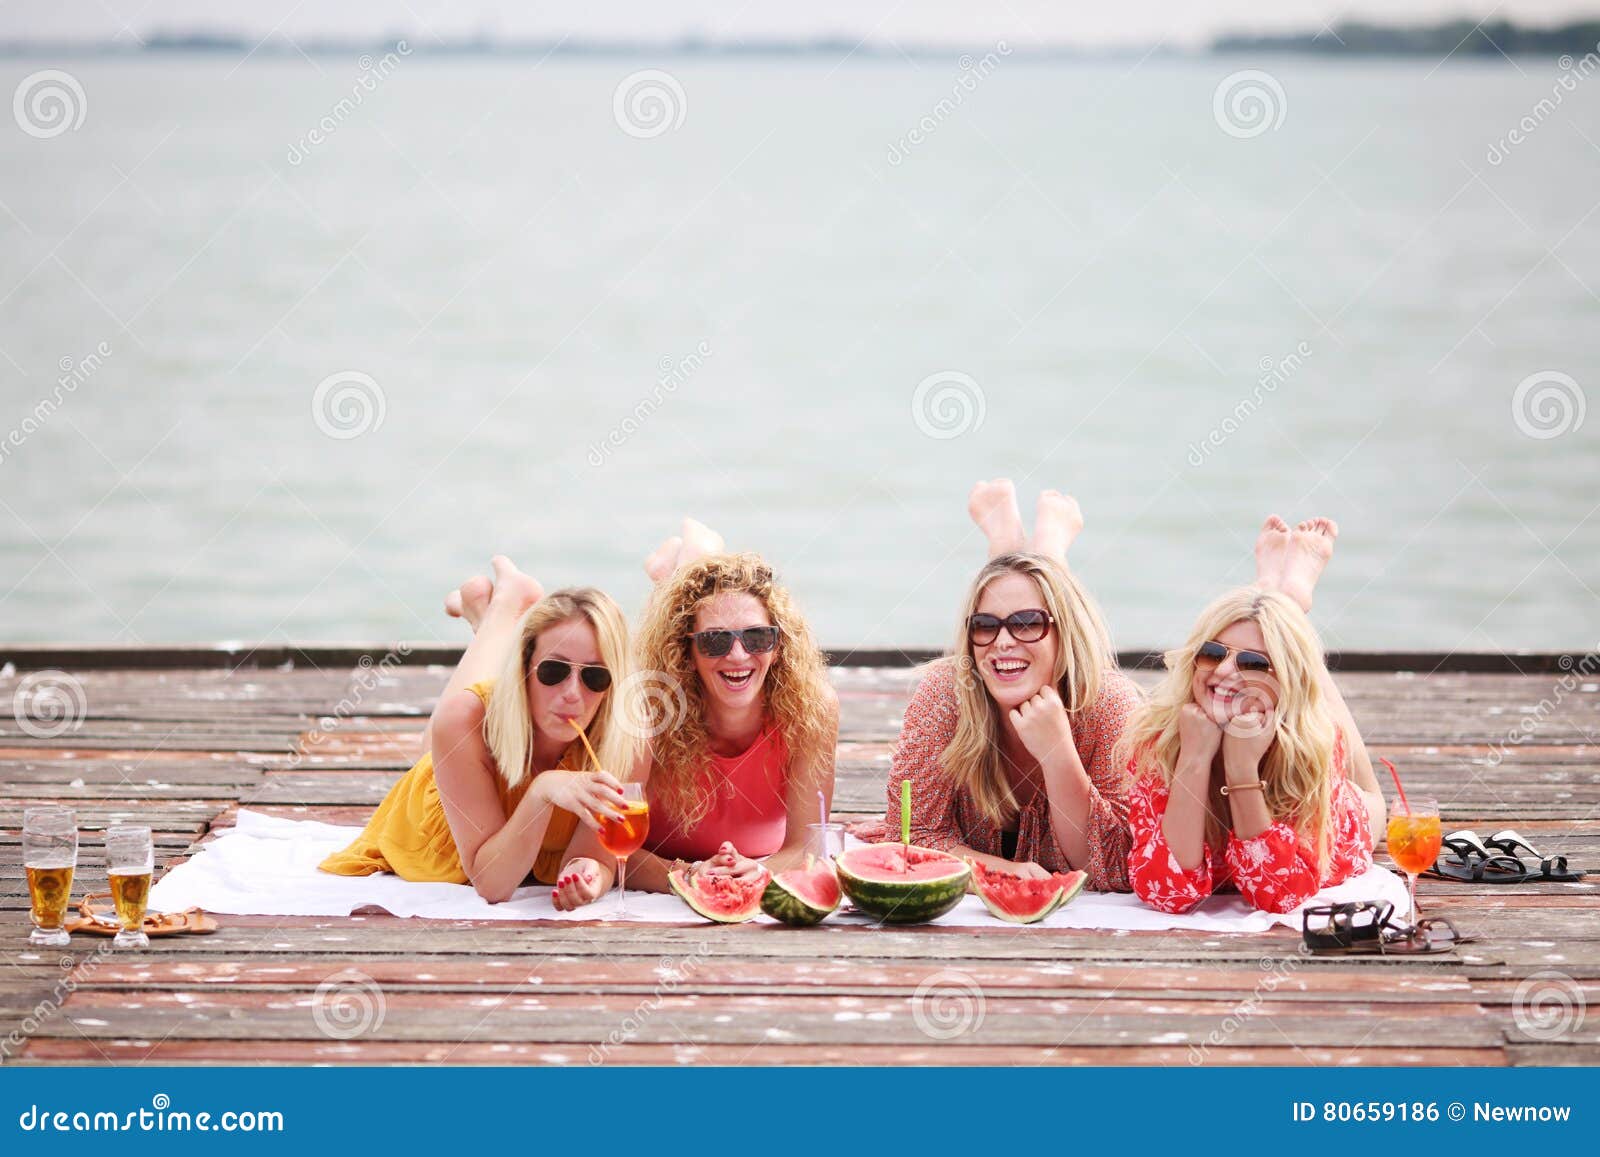 Four Girls Best Friends Enjoying Summer Stock Photo - Image of ...